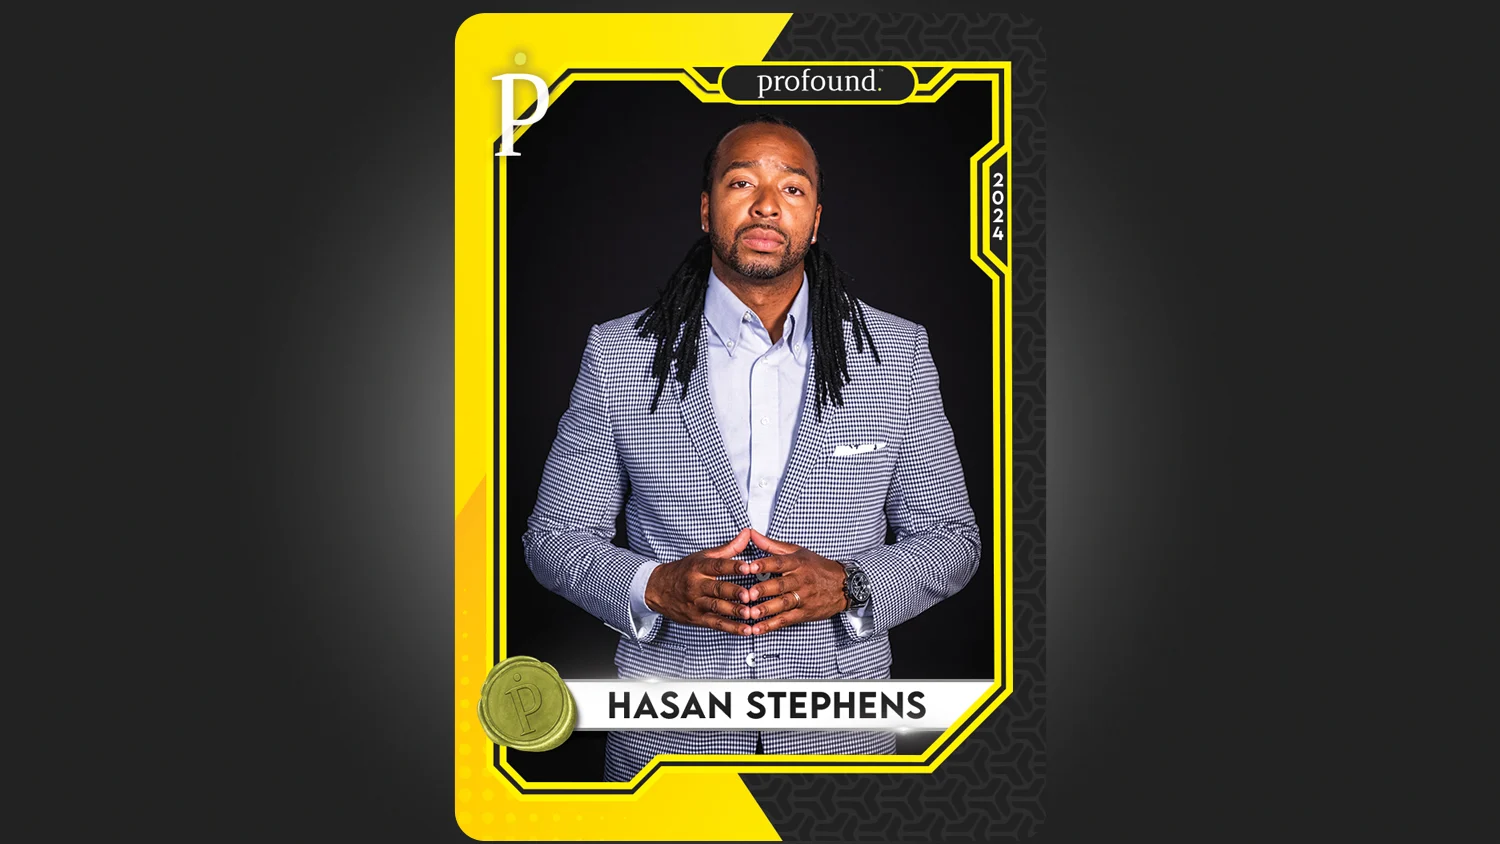 Hasan Stephens